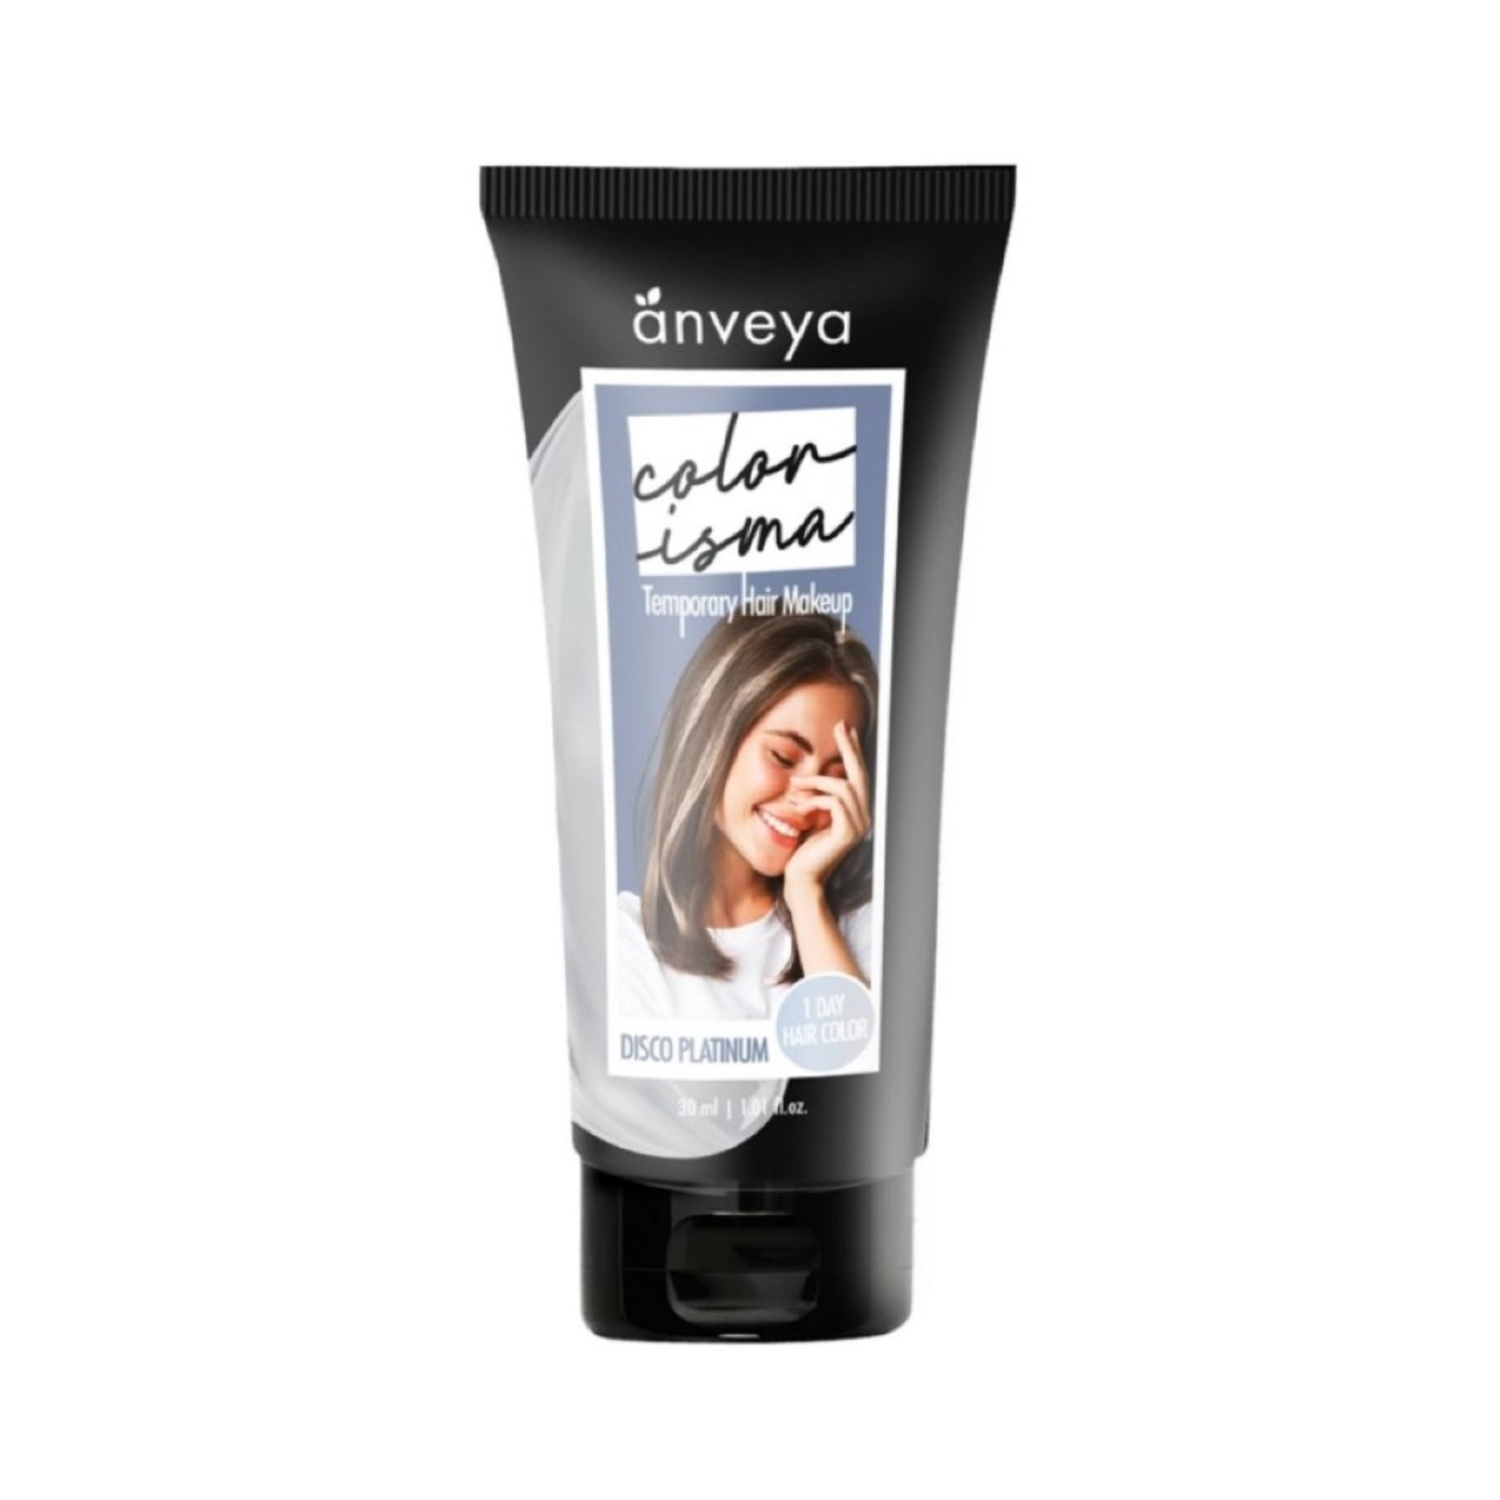 Anveya | Anveya Colorisma Hair Color Makeup - Disco Platinum (30ml)